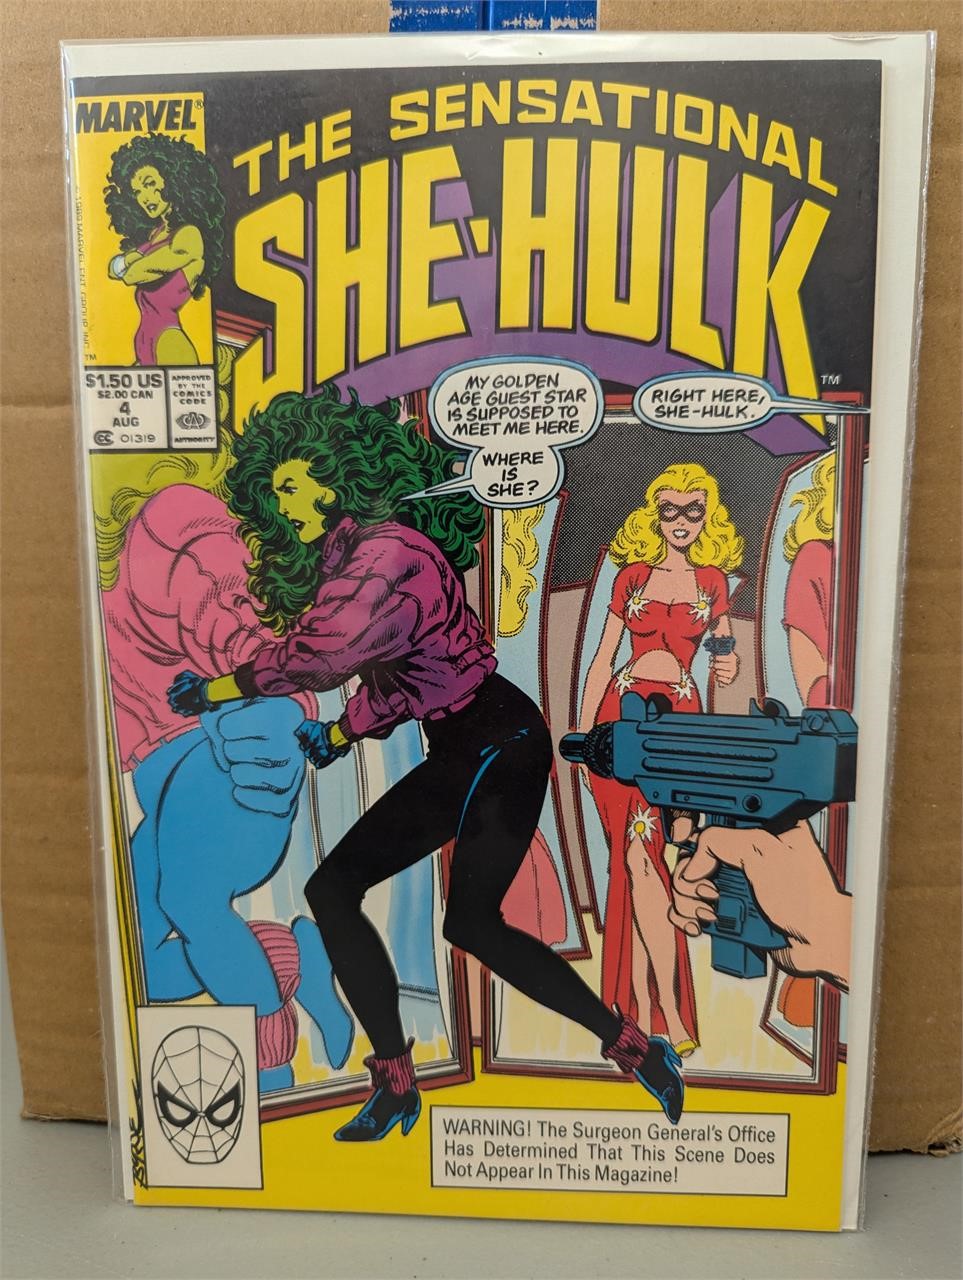 The Sensational She-Hulk, Vol. 1 #4A (1989)